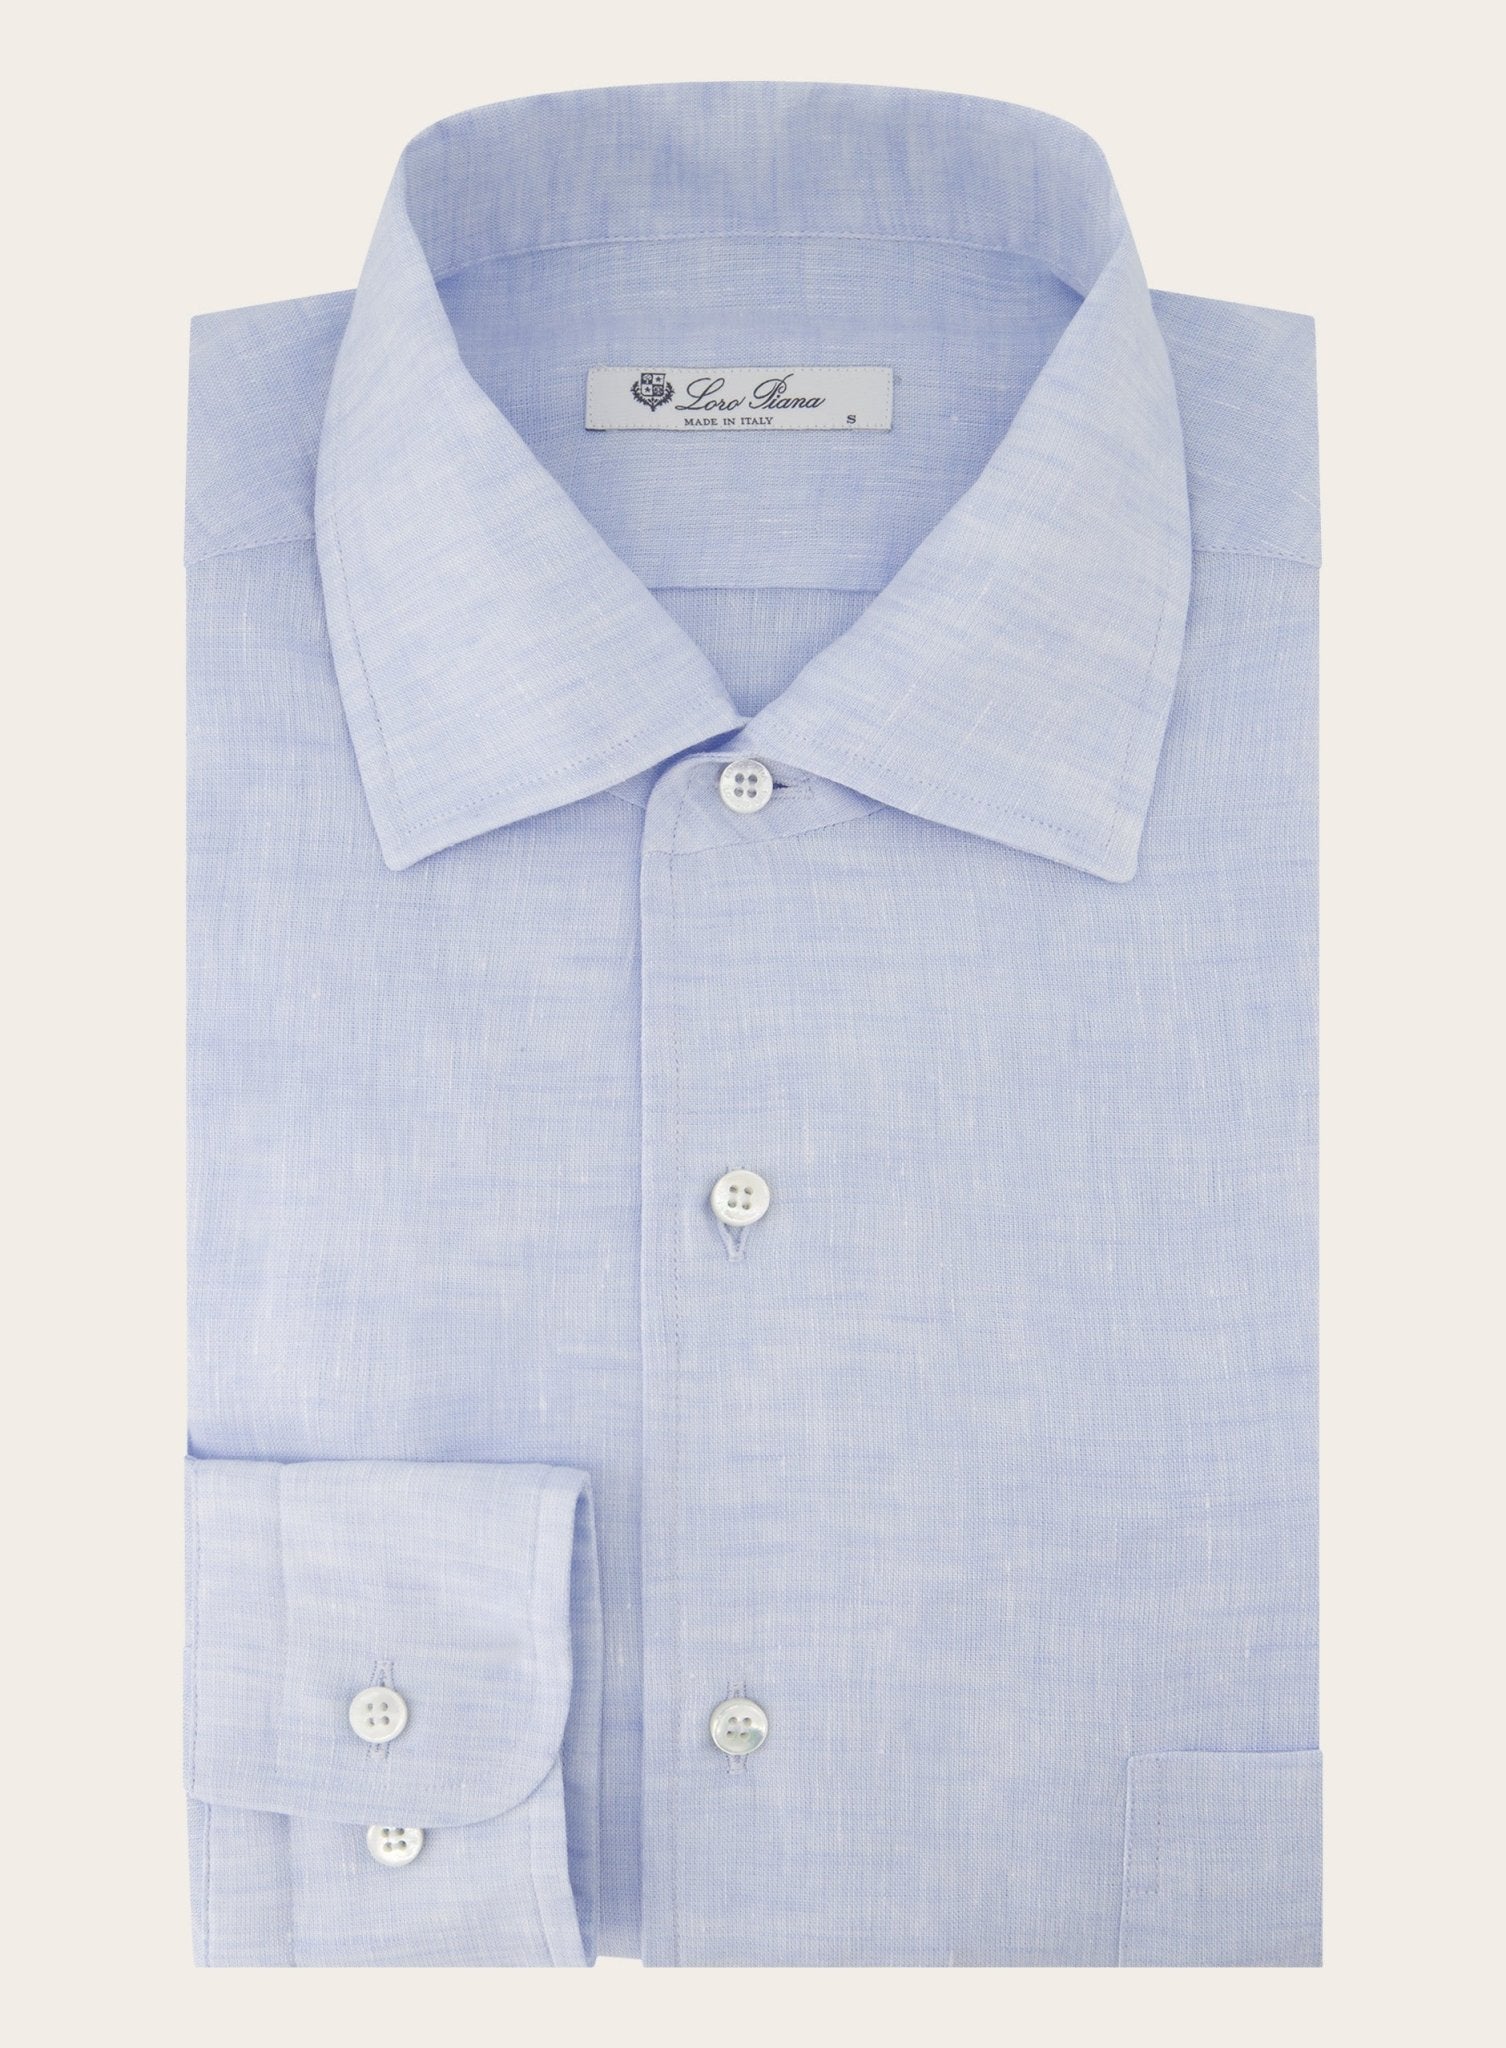 André shirt van linnen | L.Blauw